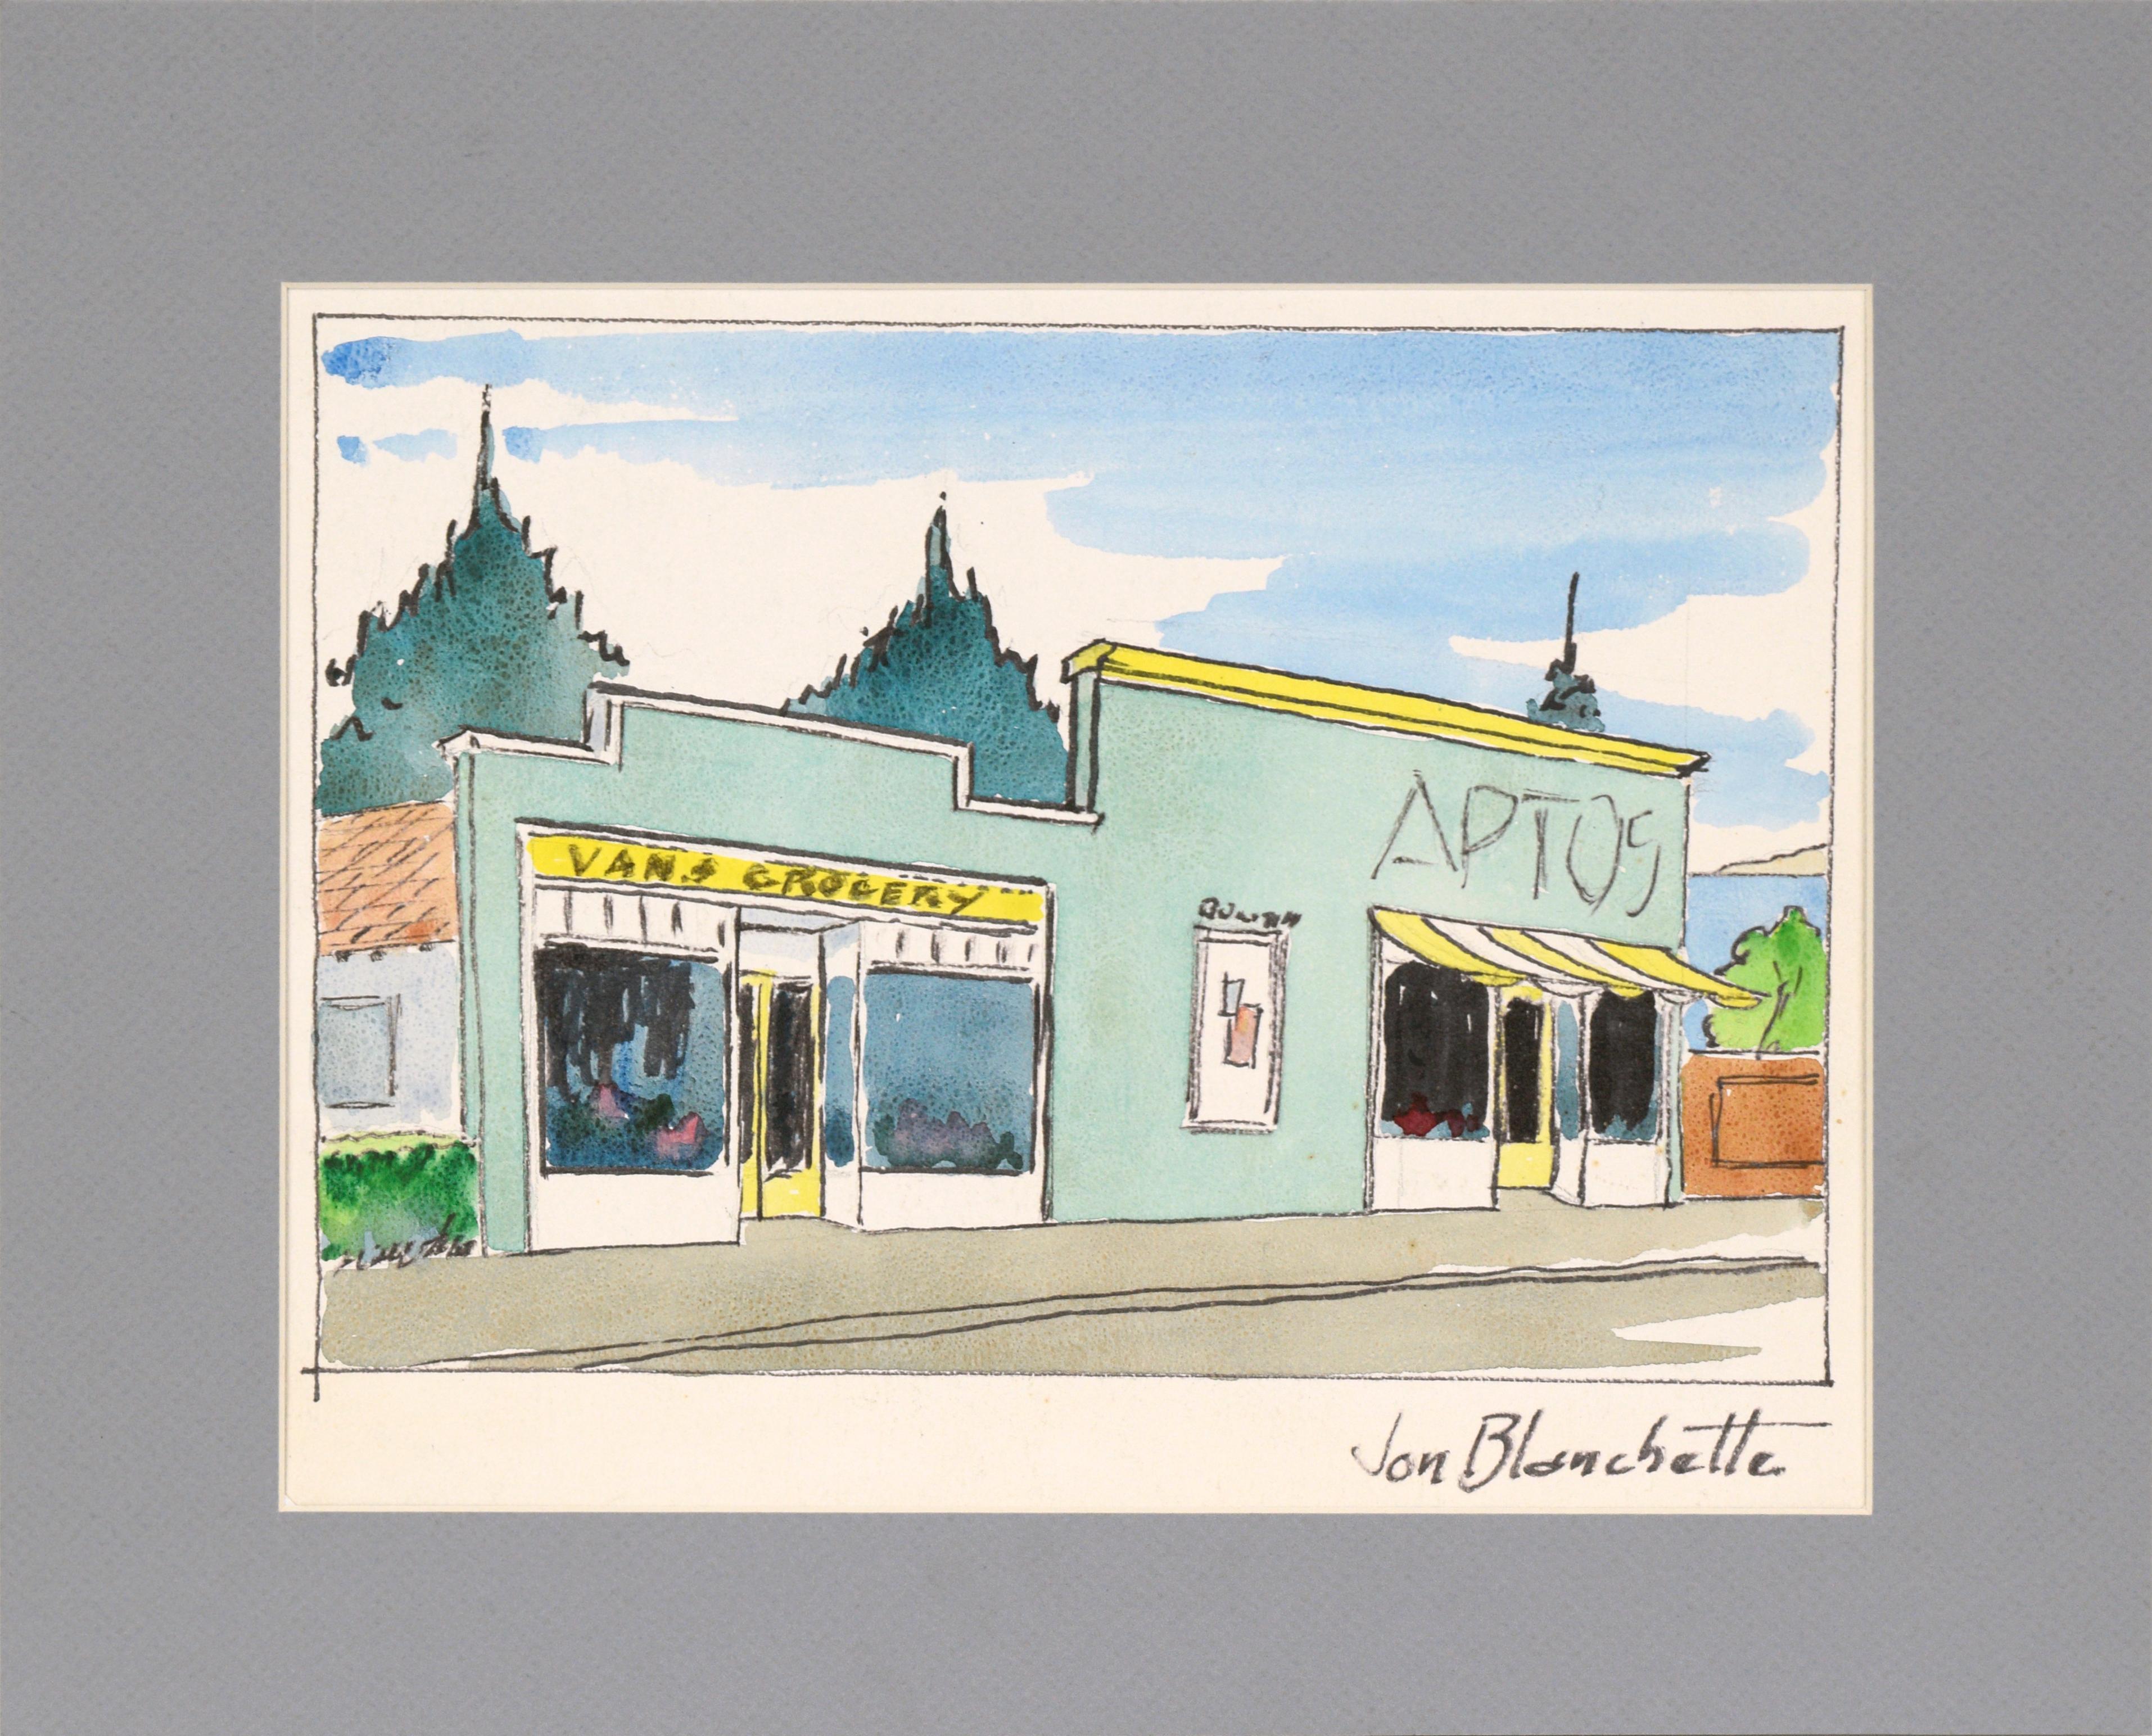 Van's Grocery, Aptos Village - Mid Century California Landscape 